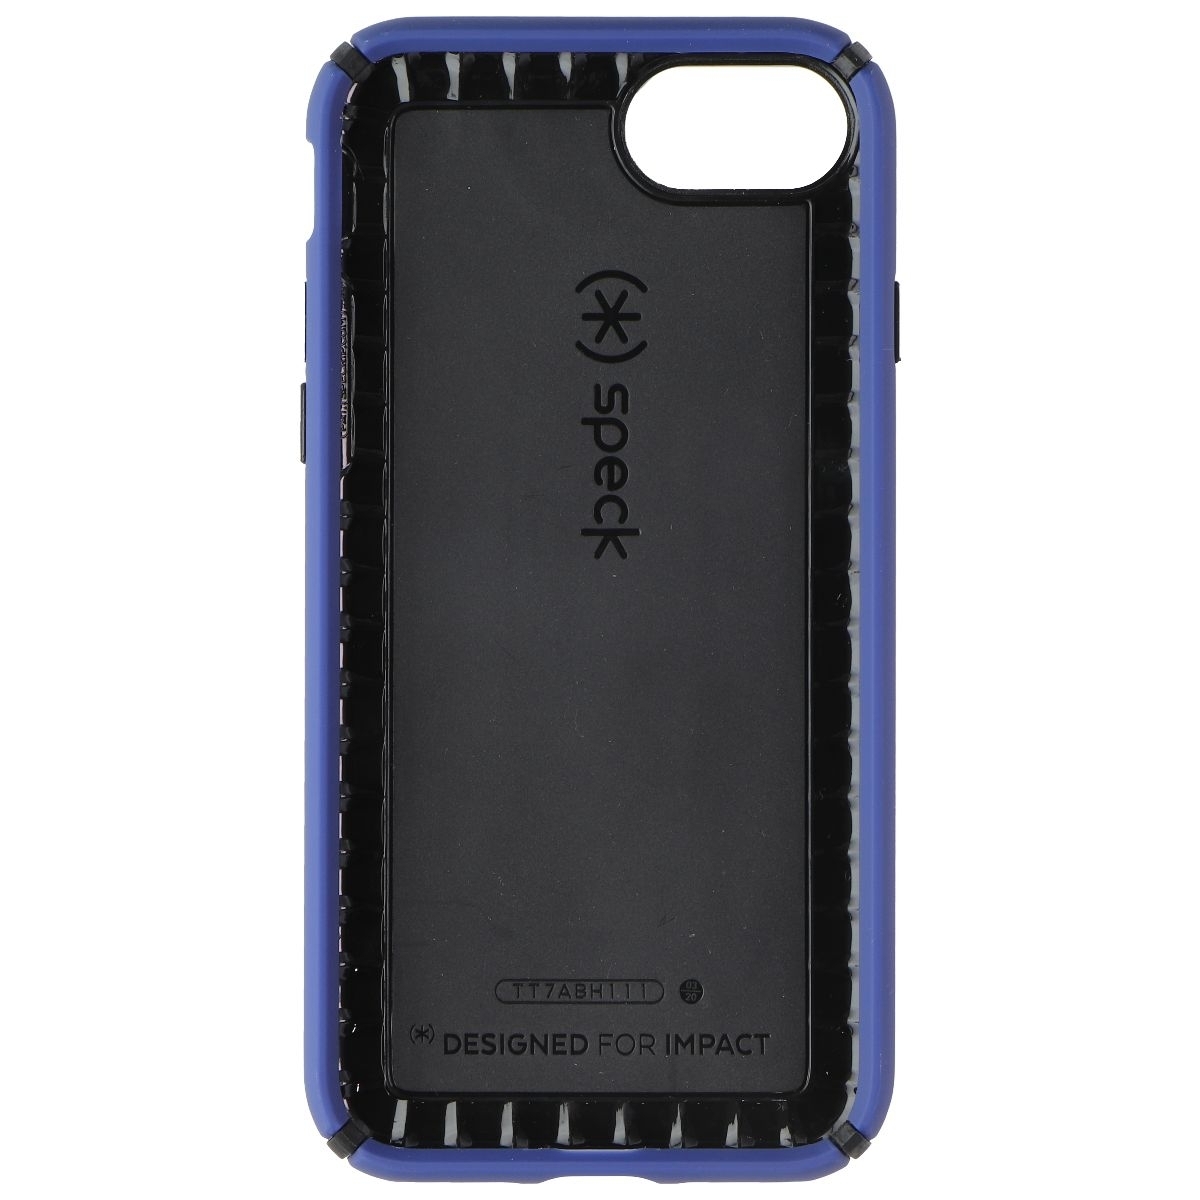 Speck Presidio2 Pro Series Case For IPhone SE (2nd Gen) / 8 / 7 - Coastal Blue (Refurbished)